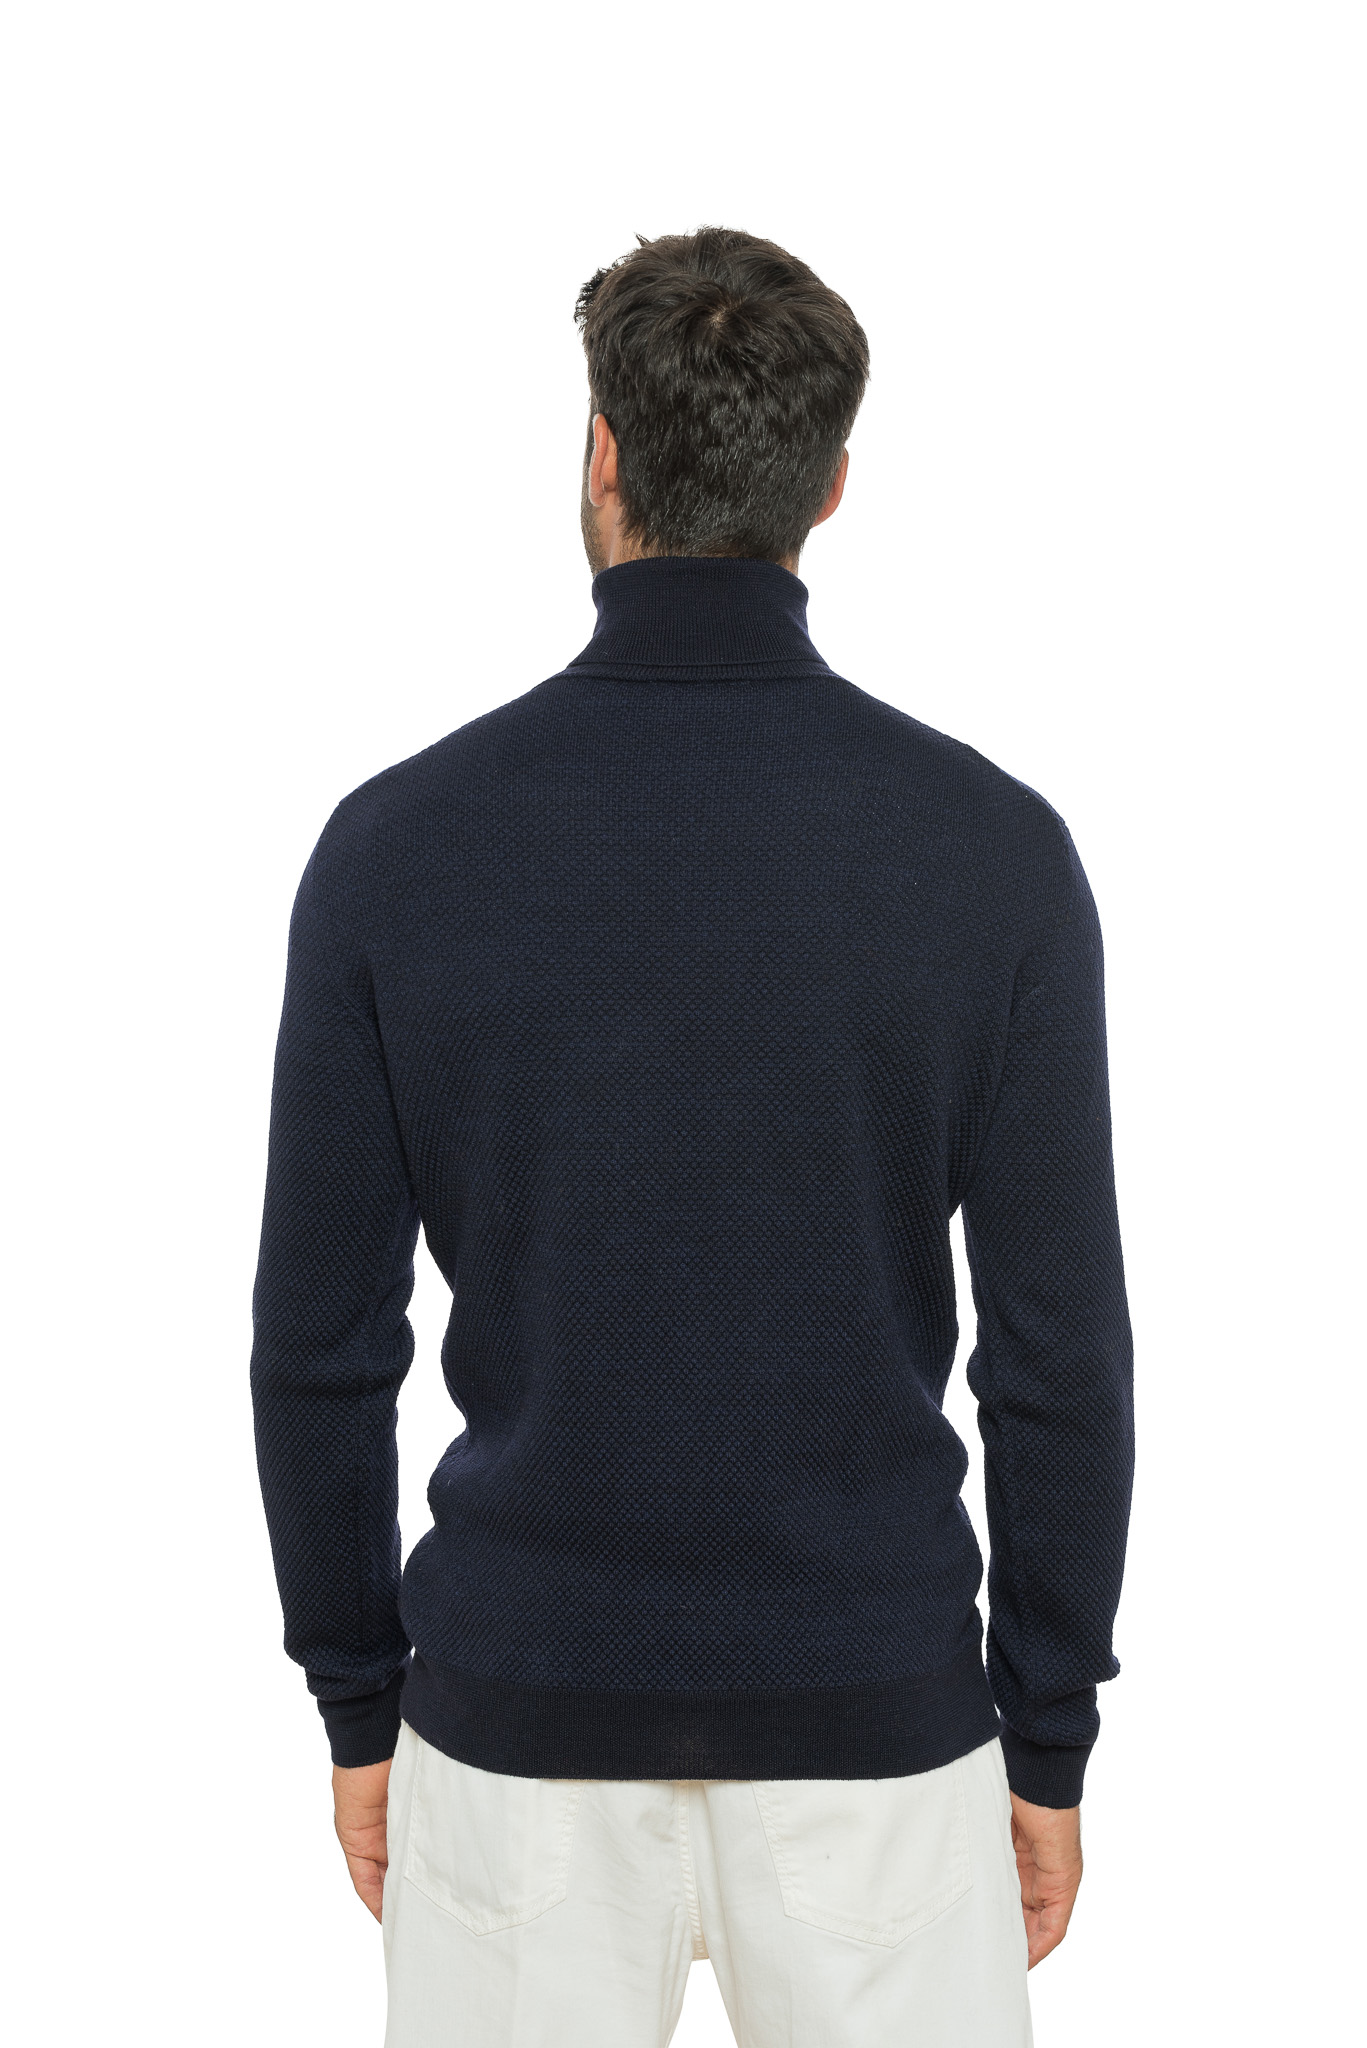 320$ ZANONE Sweater Blue Wool Cotton Turtleneck 44 US / 54 EU Made